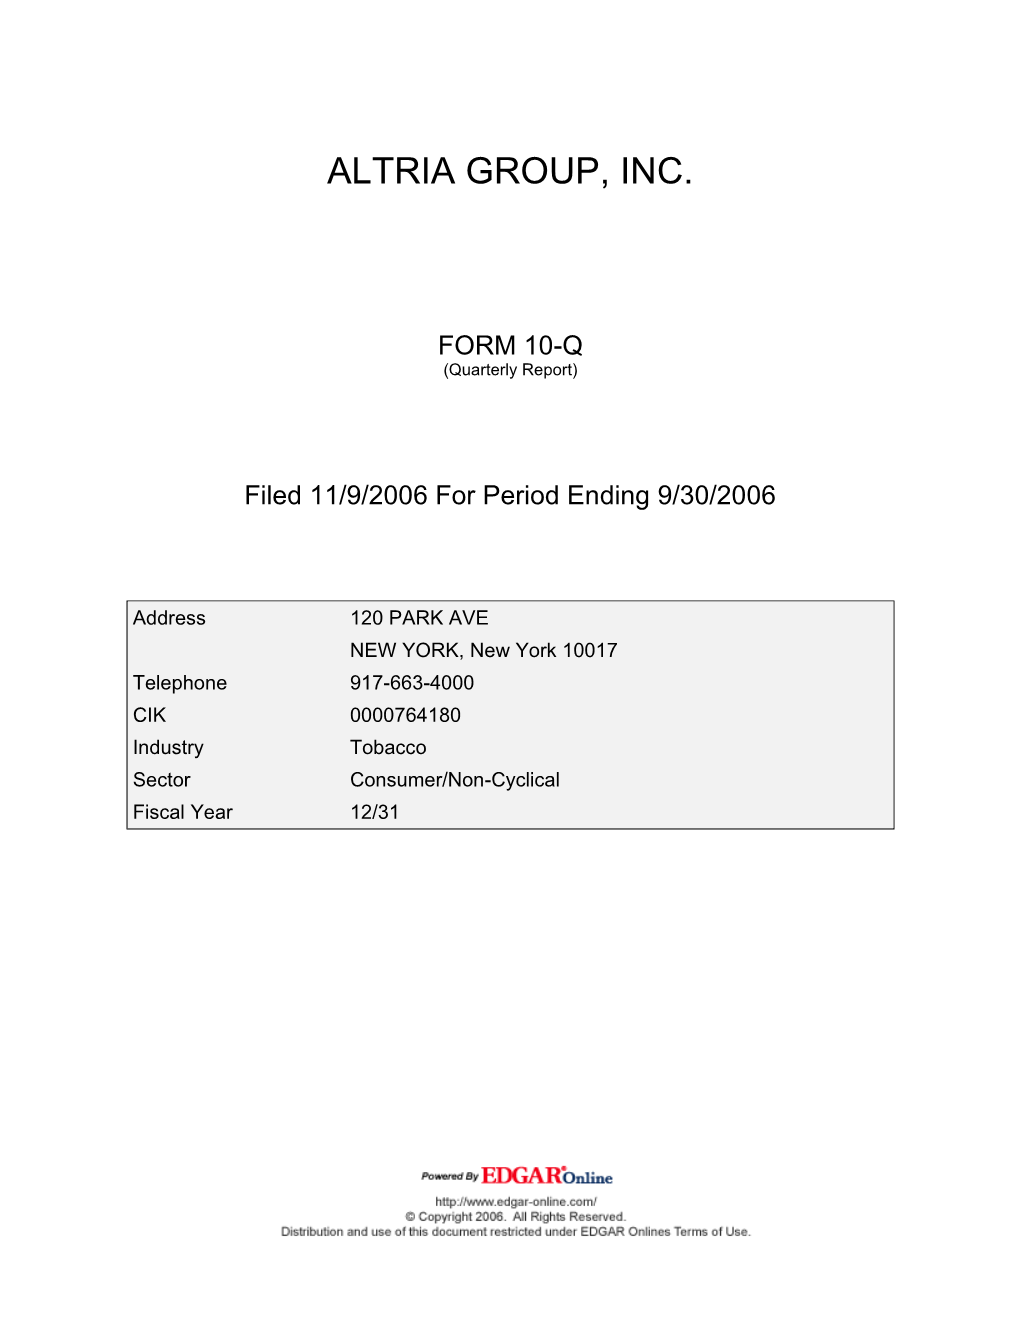 Altria Group, Inc